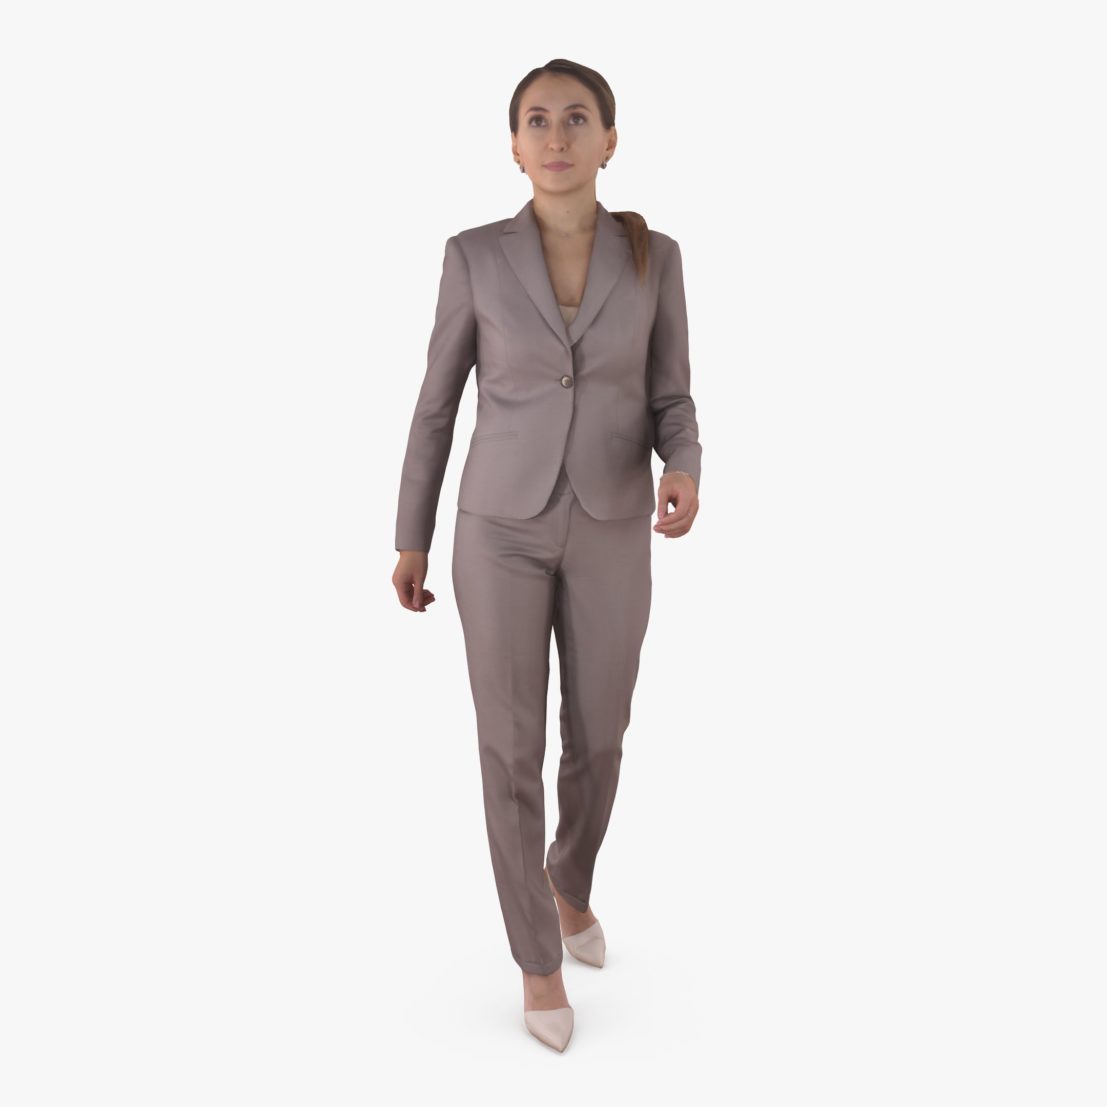 Business Woman Active 3D Model | 3DTree Scanning Studio